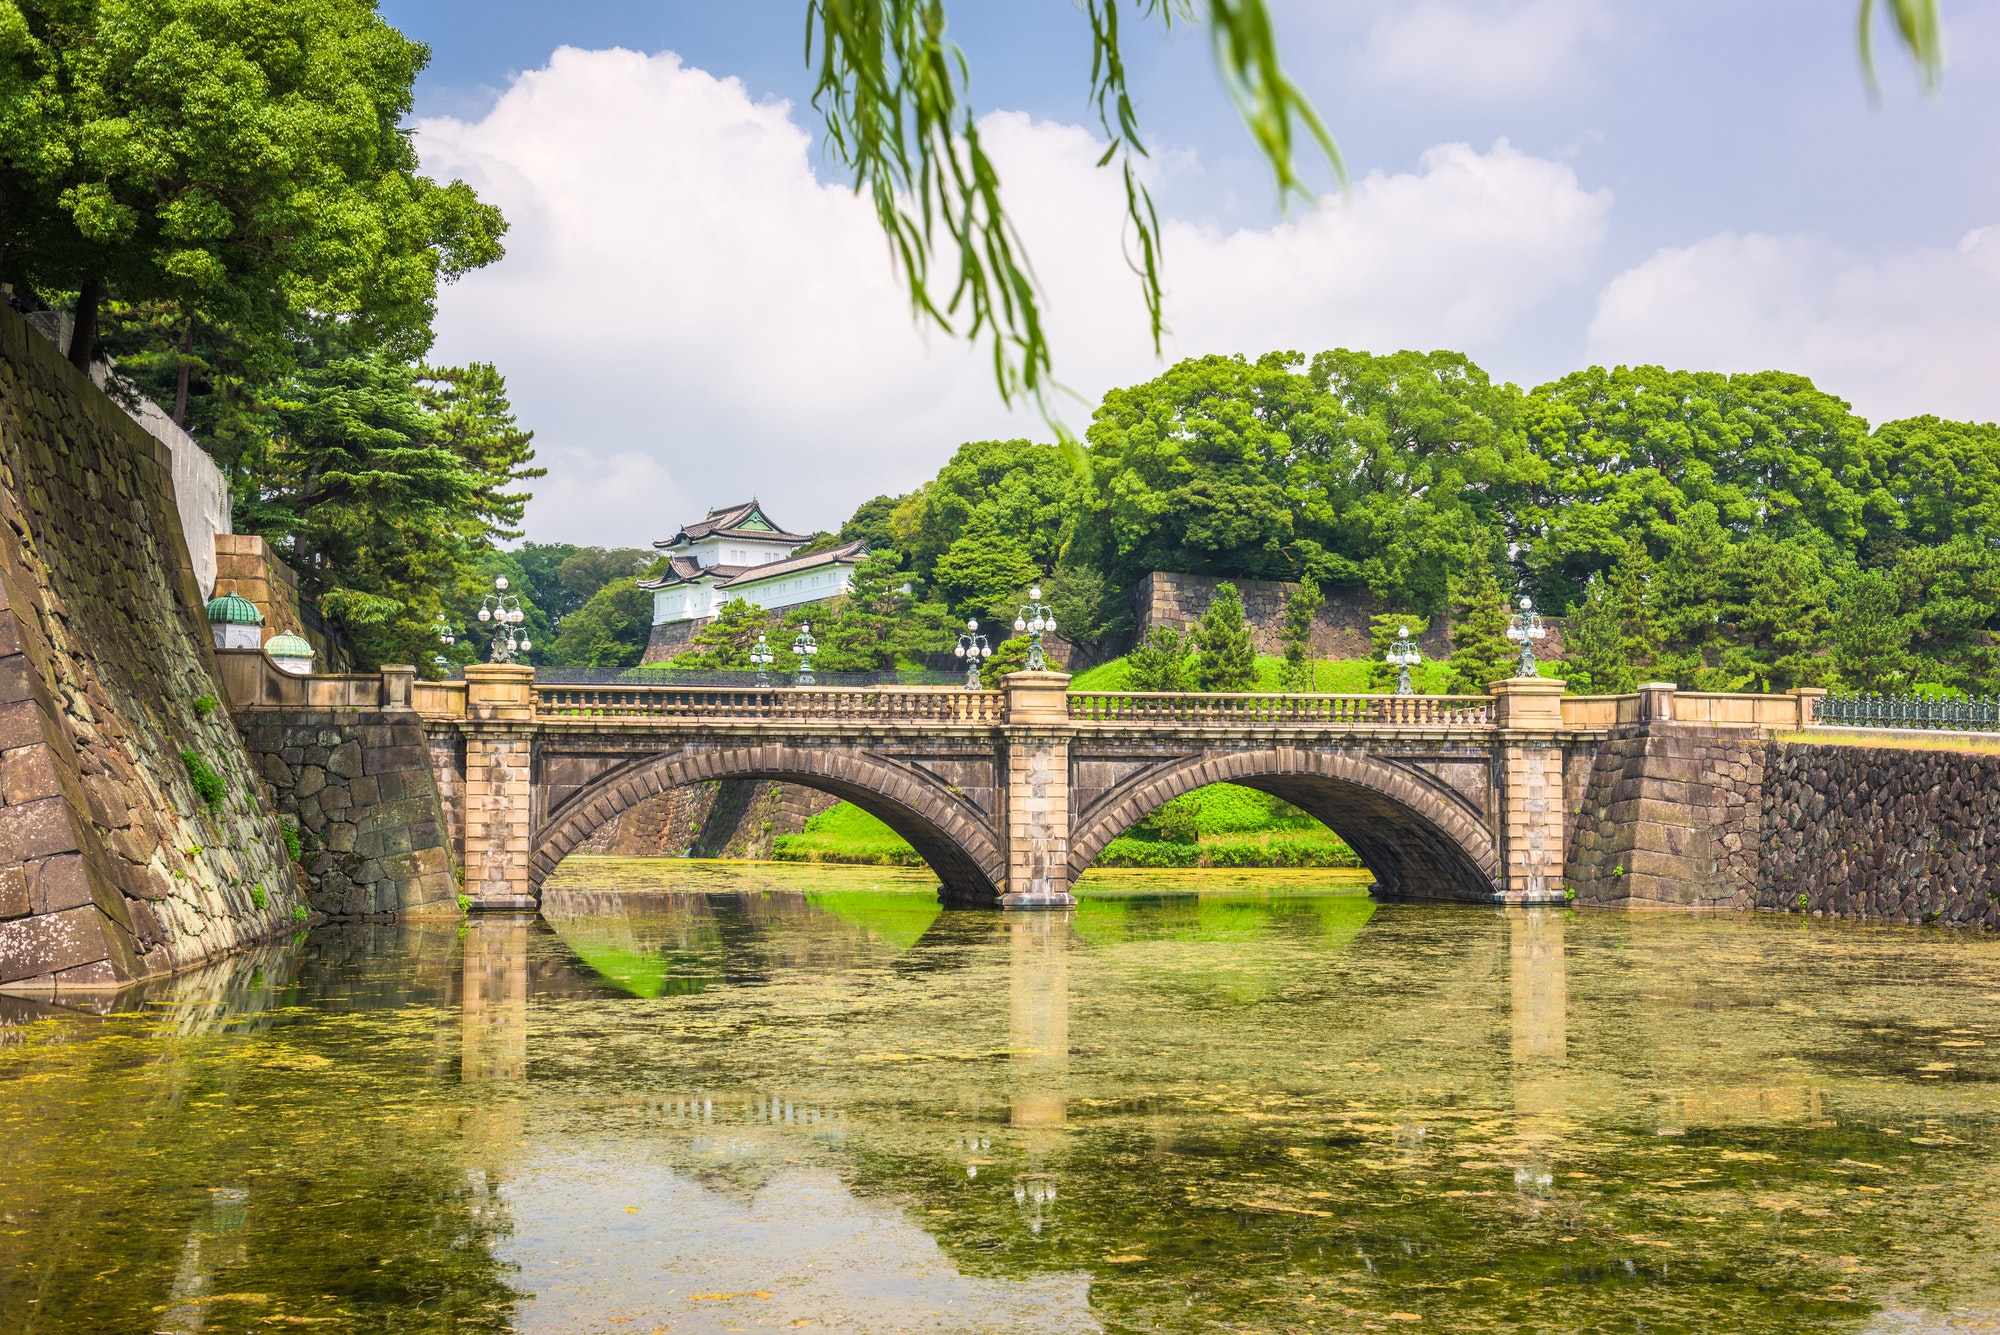 Tokyo, Japan at the Imperial Palace moat and bridge.